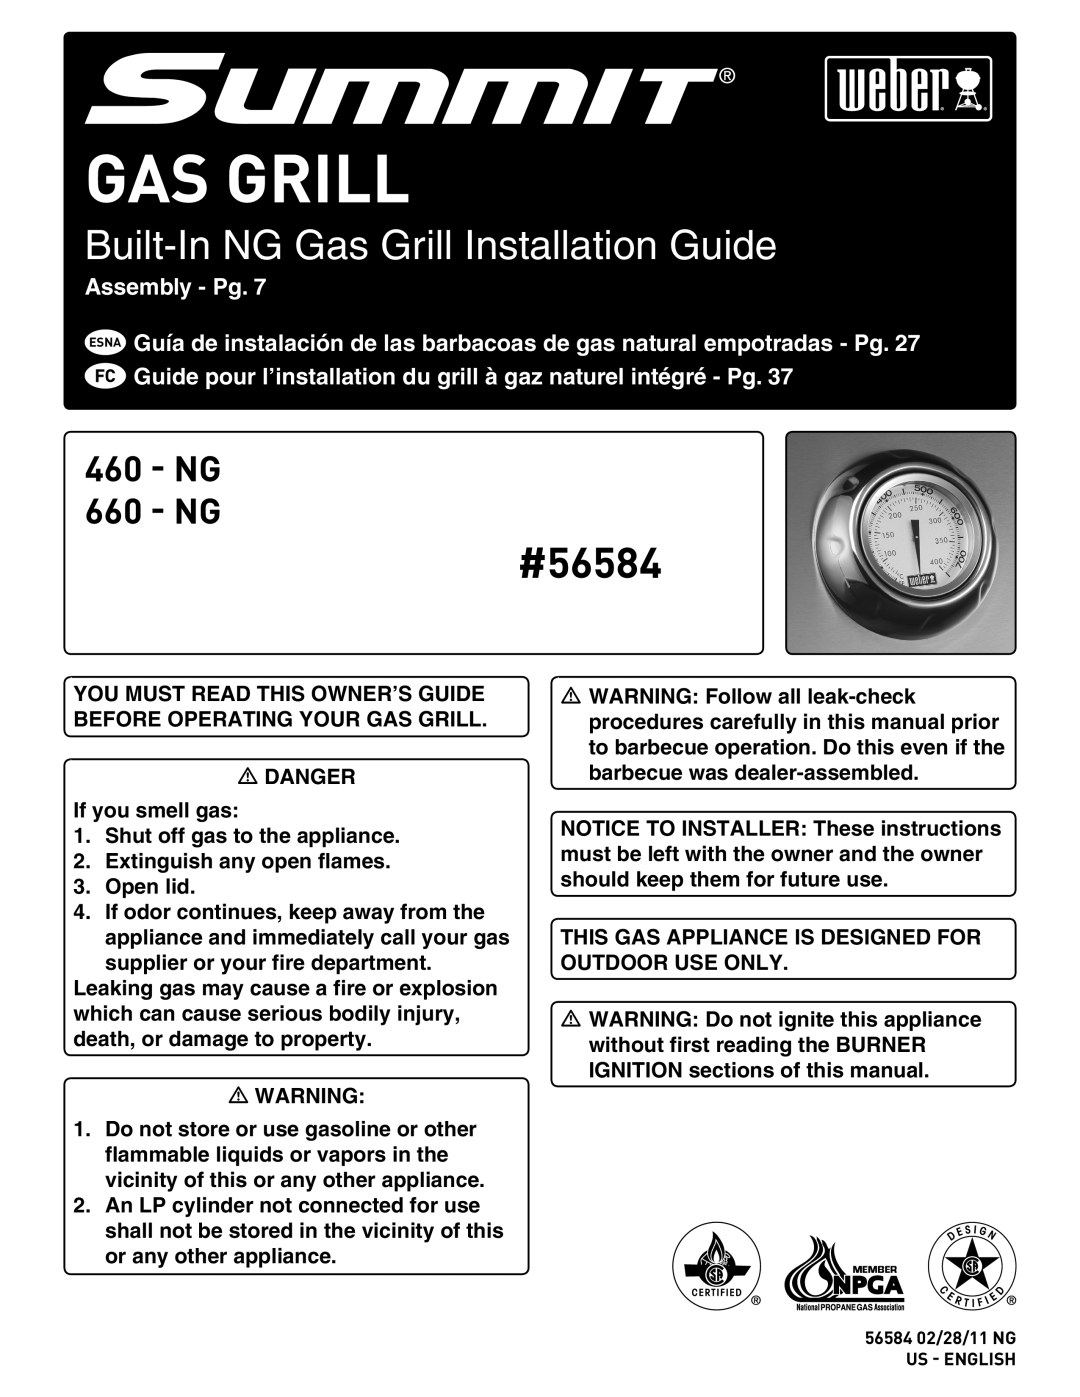 Weber 56576, Summit Gas Grill manual #56584, Built-In NG Gas Grill Installation Guide, NG 660 - NG, Assembly - Pg 